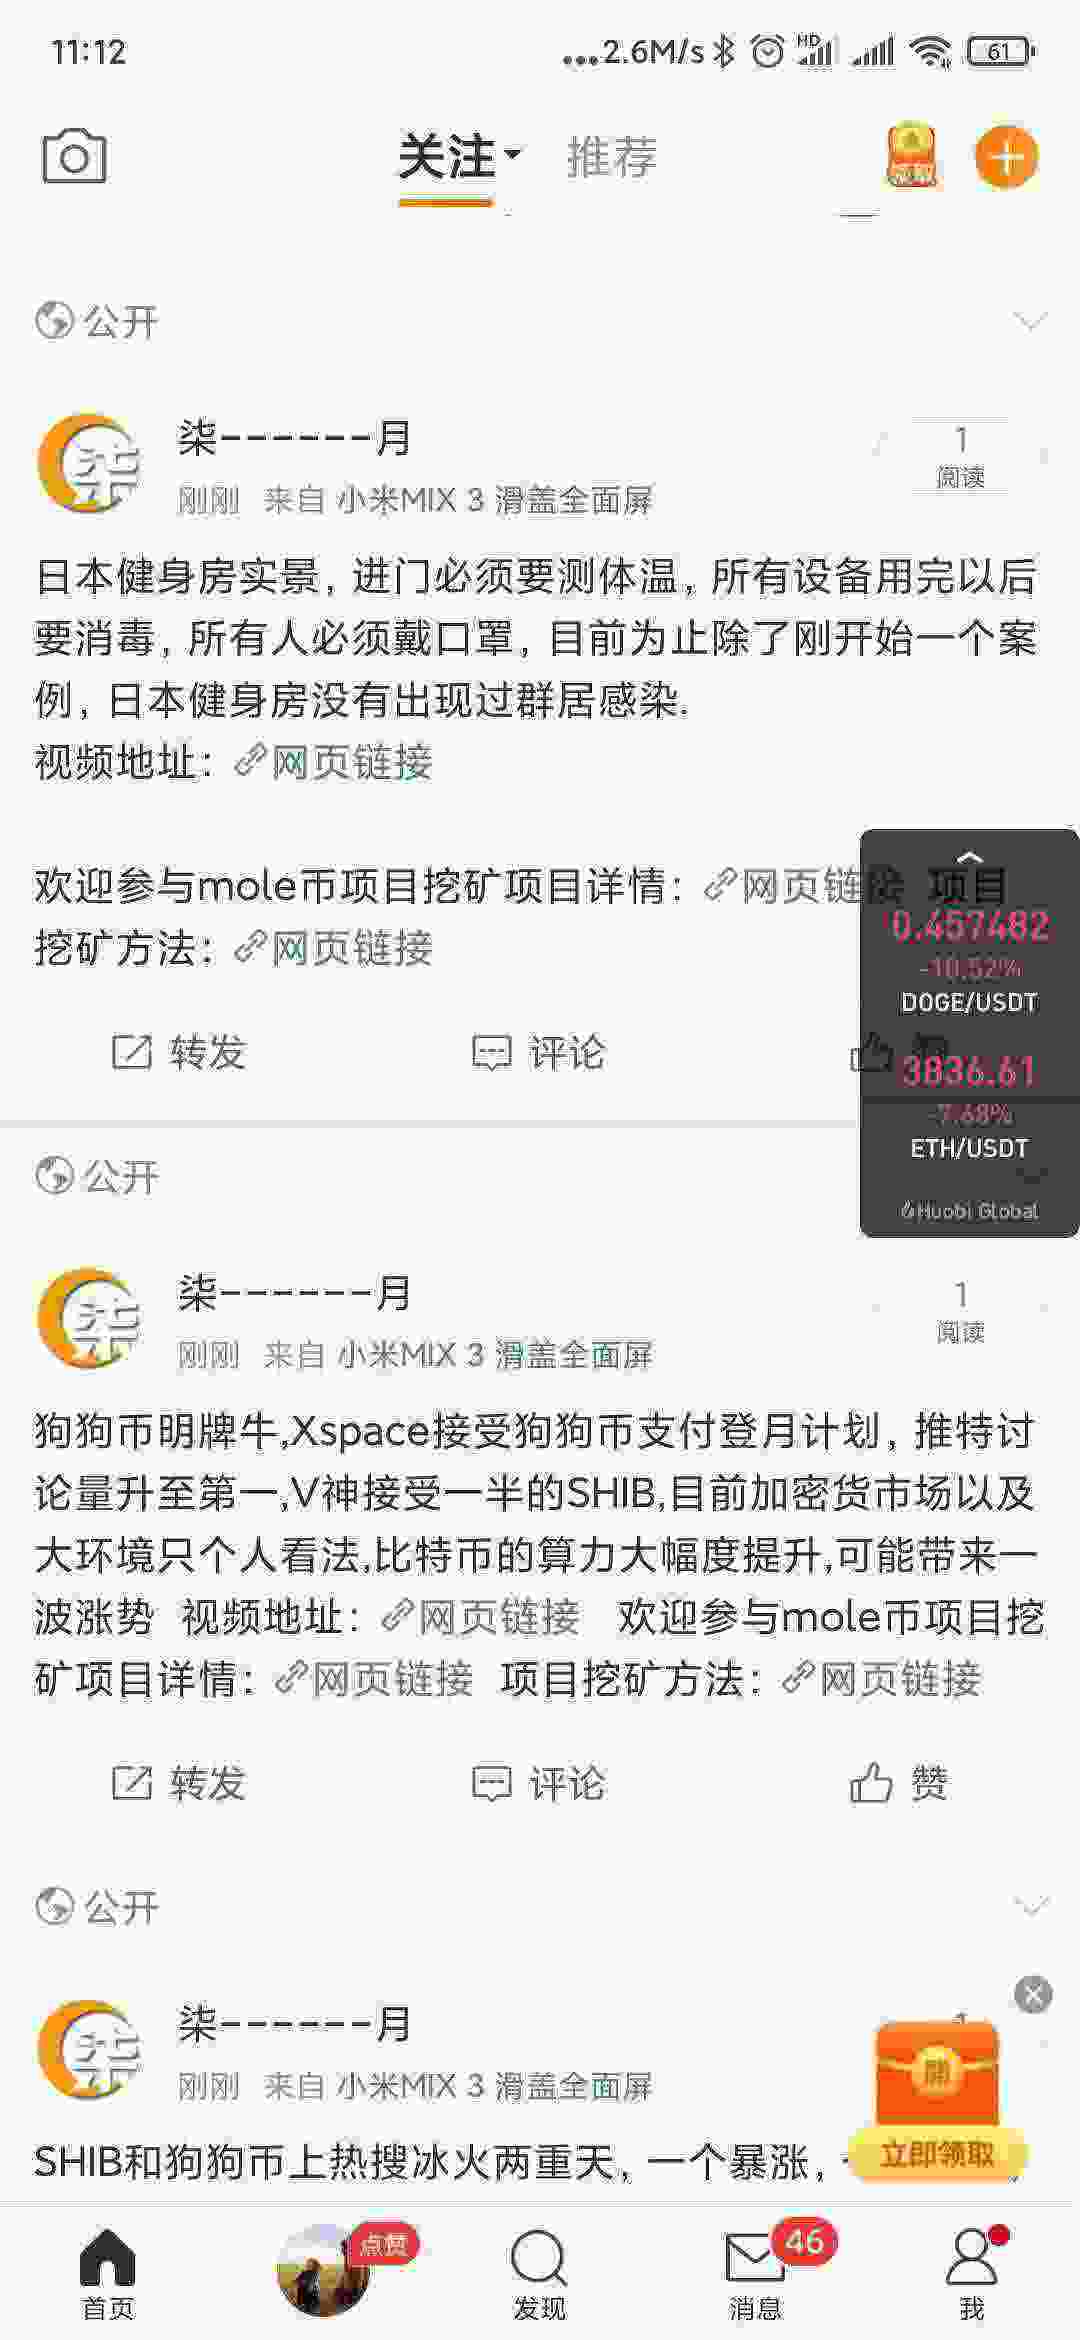 Screenshot_2021-05-11-11-12-47-235_com.sina.weibo.jpg